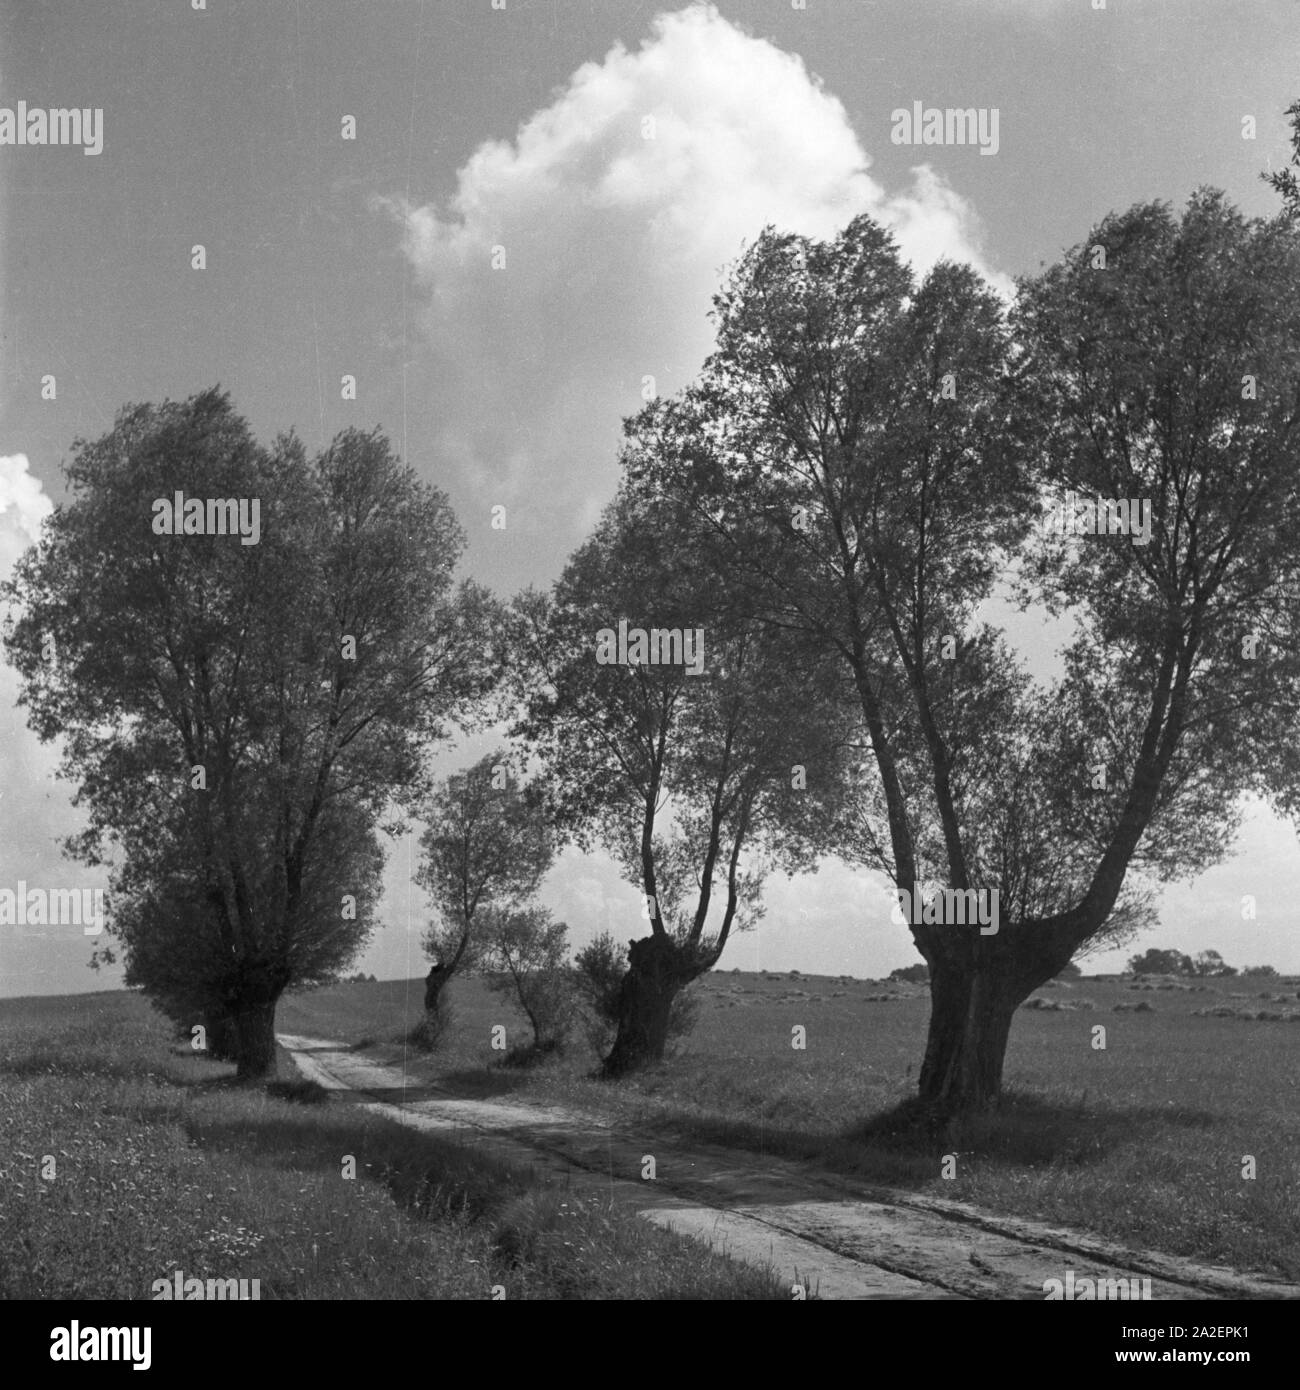 Bäume in der Umgebung von Nikolaiken in Masuren in Ostpreußen, Deutschland 1930er Jahre. Gli alberi nei dintorni di Nikolaiken in Masuria nella Prussia orientale, Germania 1930s. Foto Stock